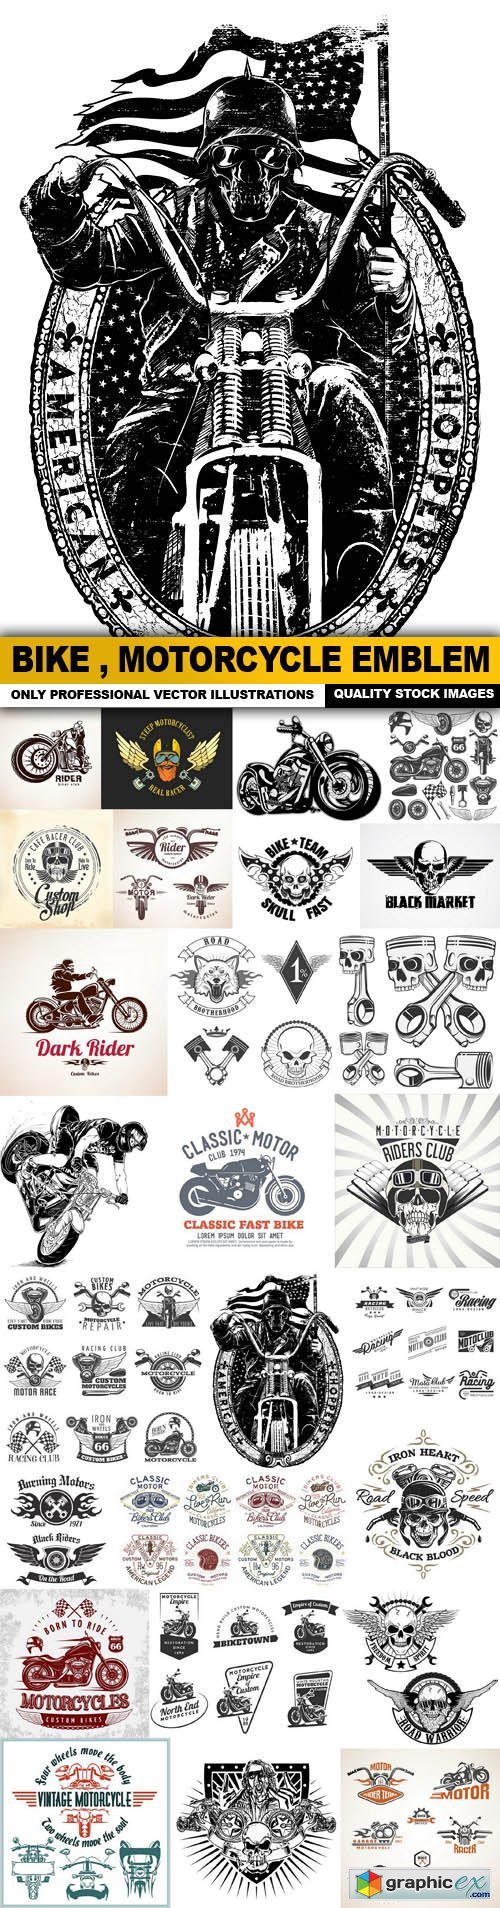 Bike , Motorcycle Emblem Collection